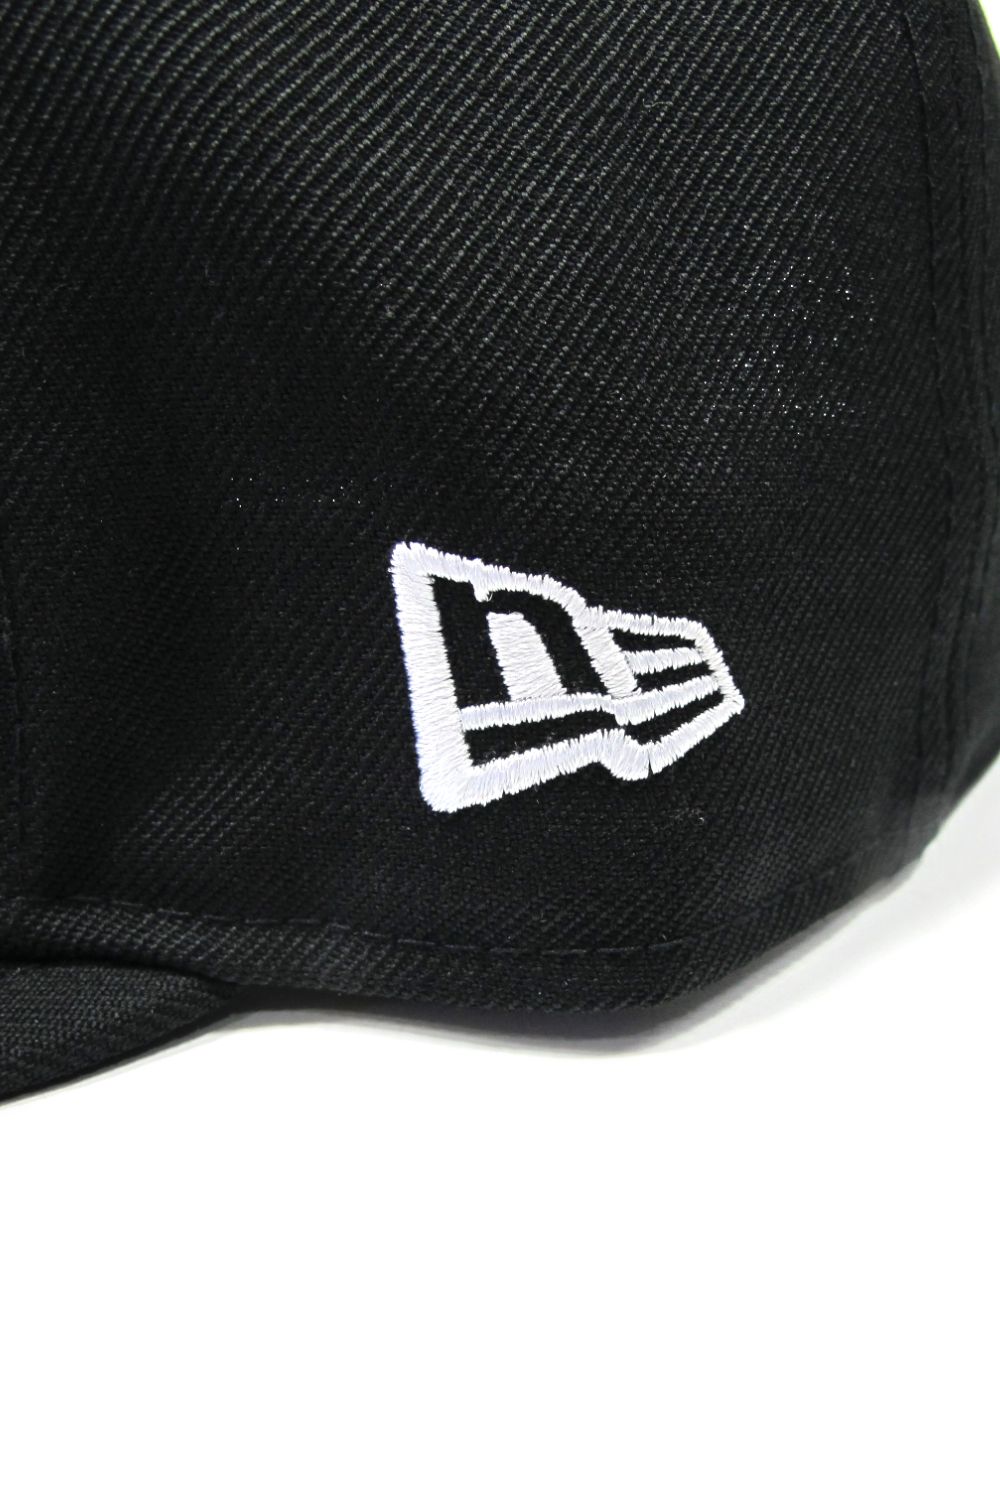 HideandSeek - ×TENDERLOIN×NEWERA BASEBALL CAP (BLACK 